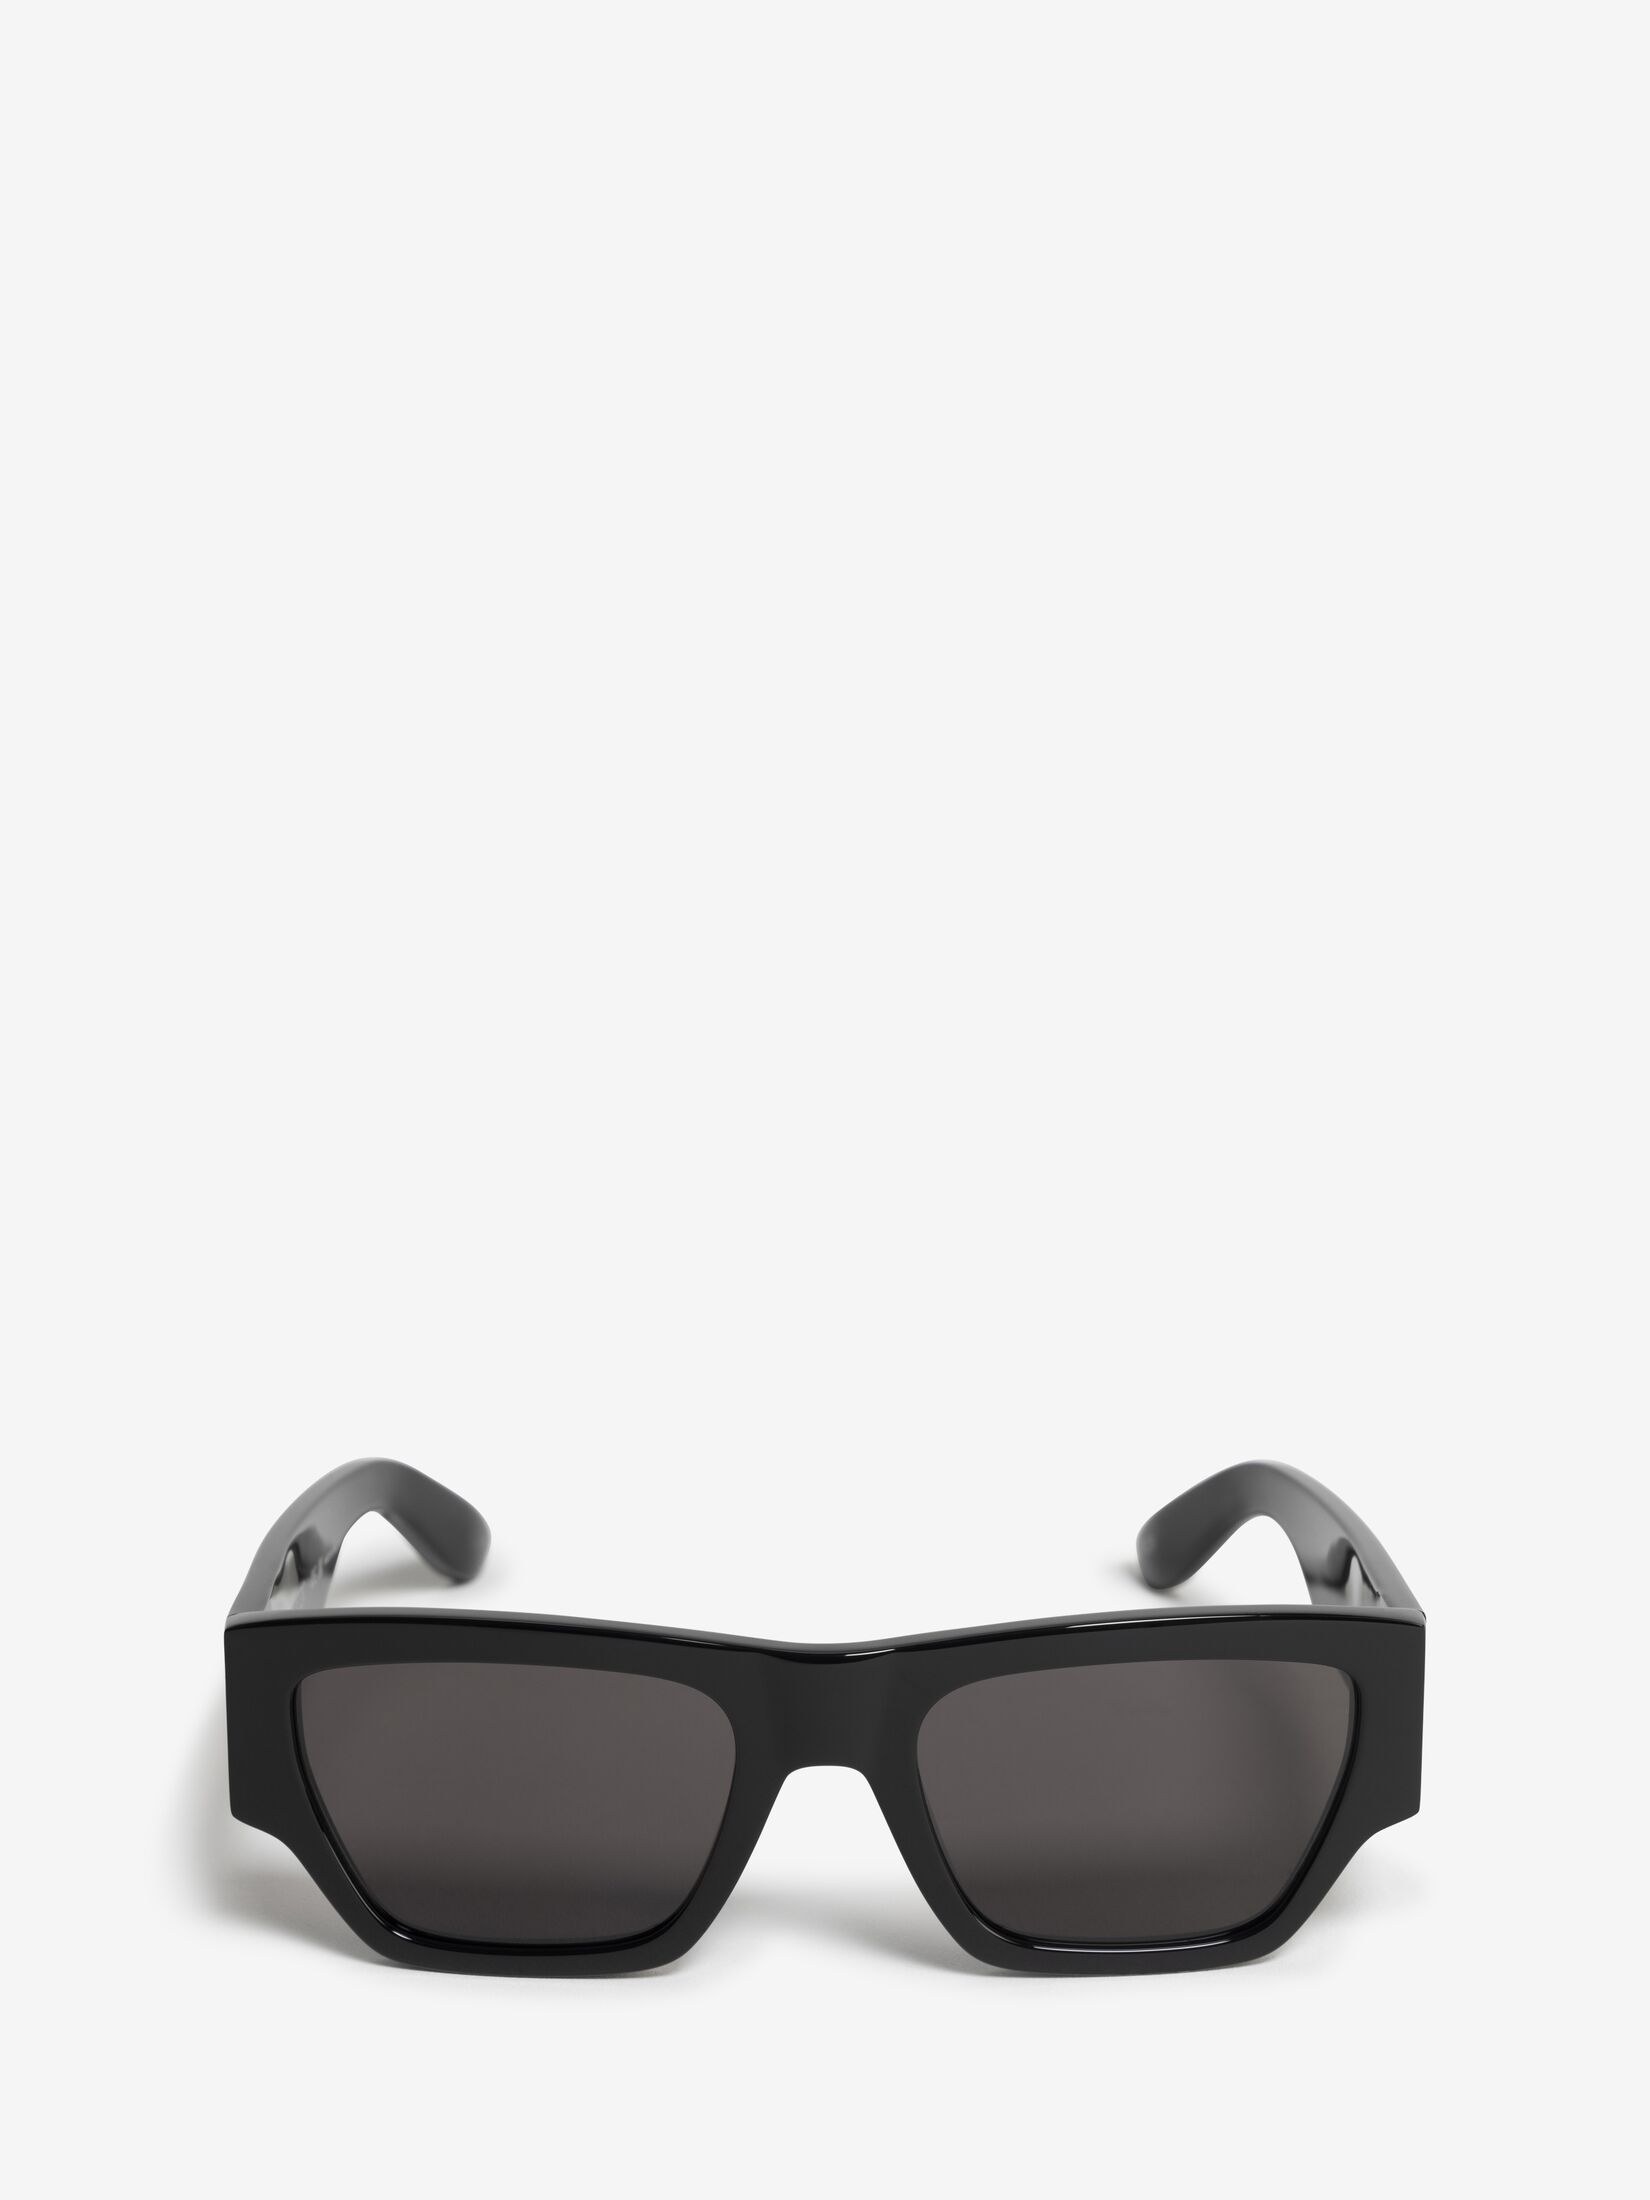 Abgewinkelte rechteckige McQueen Sonnenbrille